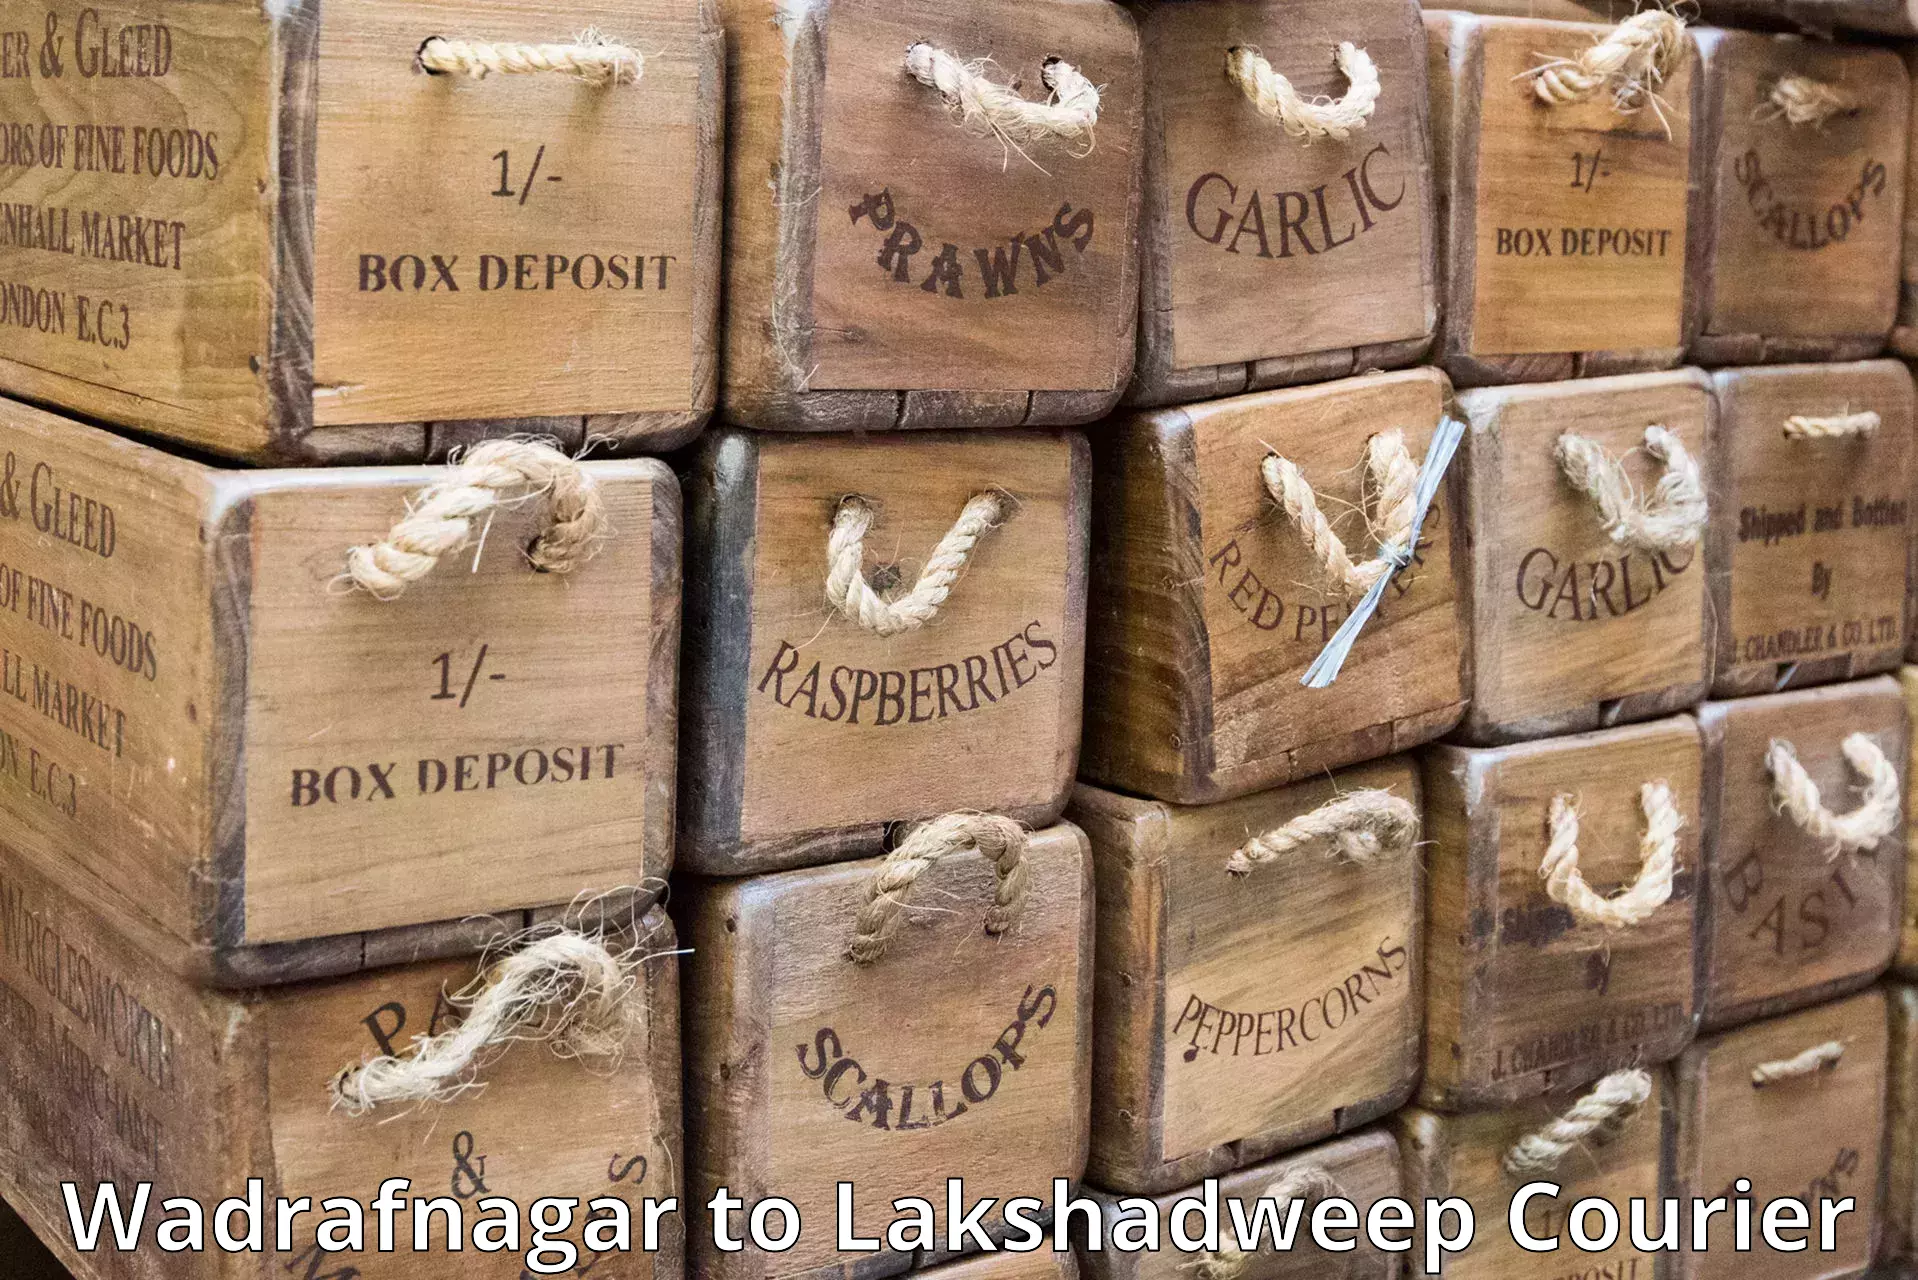 Same day shipping Wadrafnagar to Lakshadweep